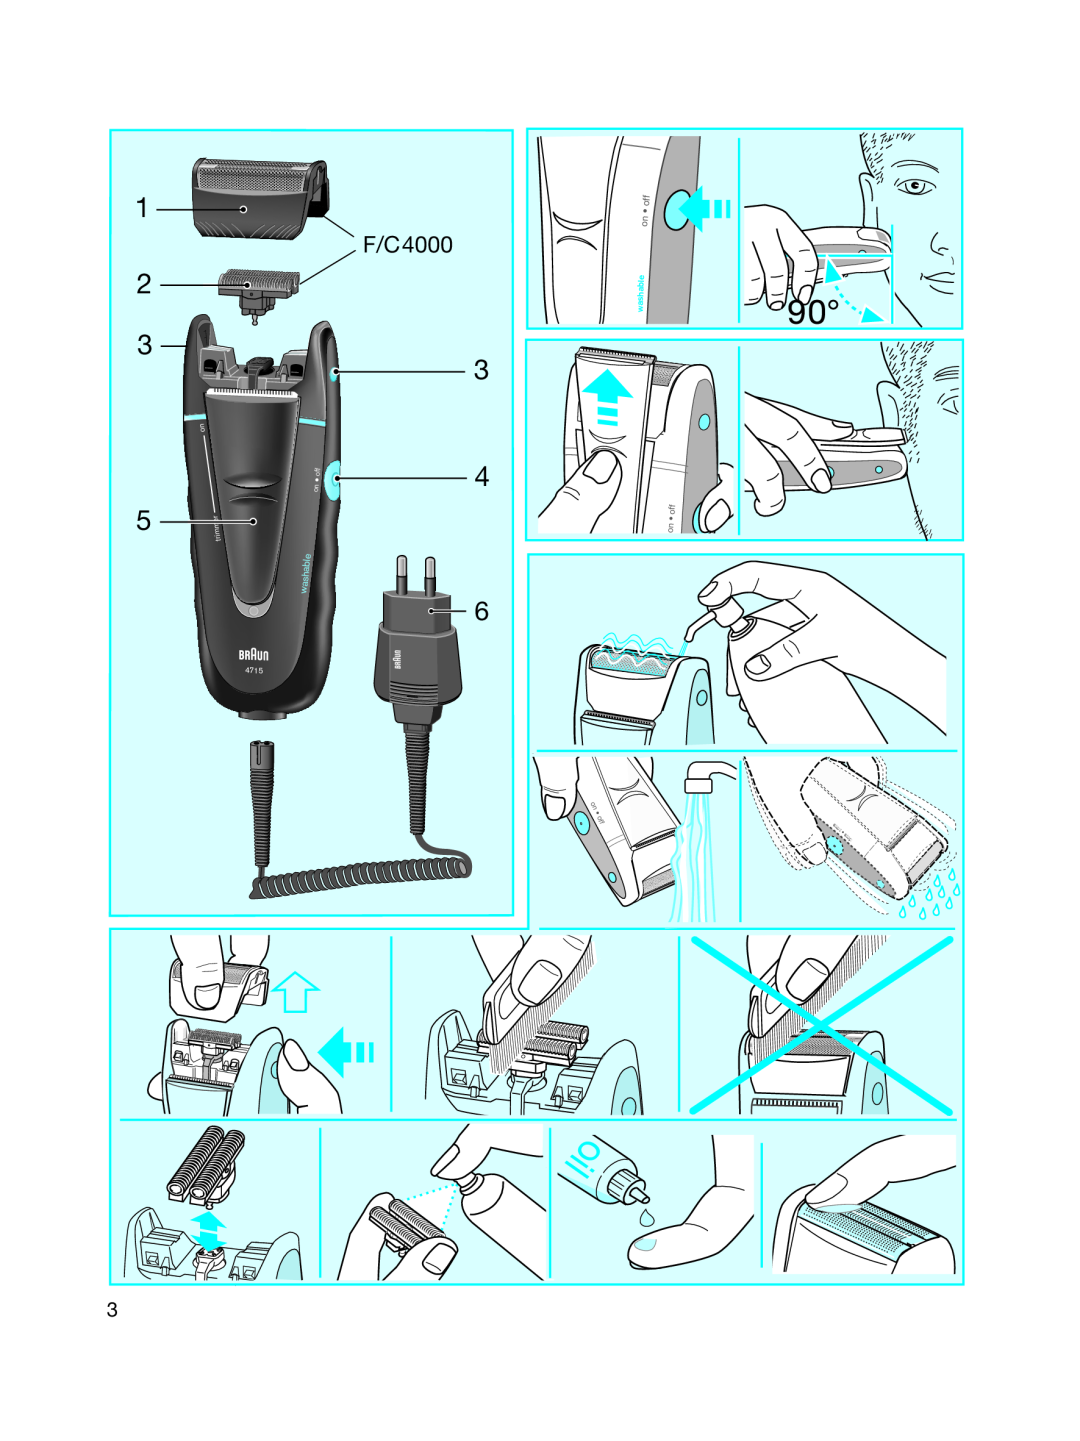 Braun Type 5717 manual F/C4000, trimmer, washable, 4715 